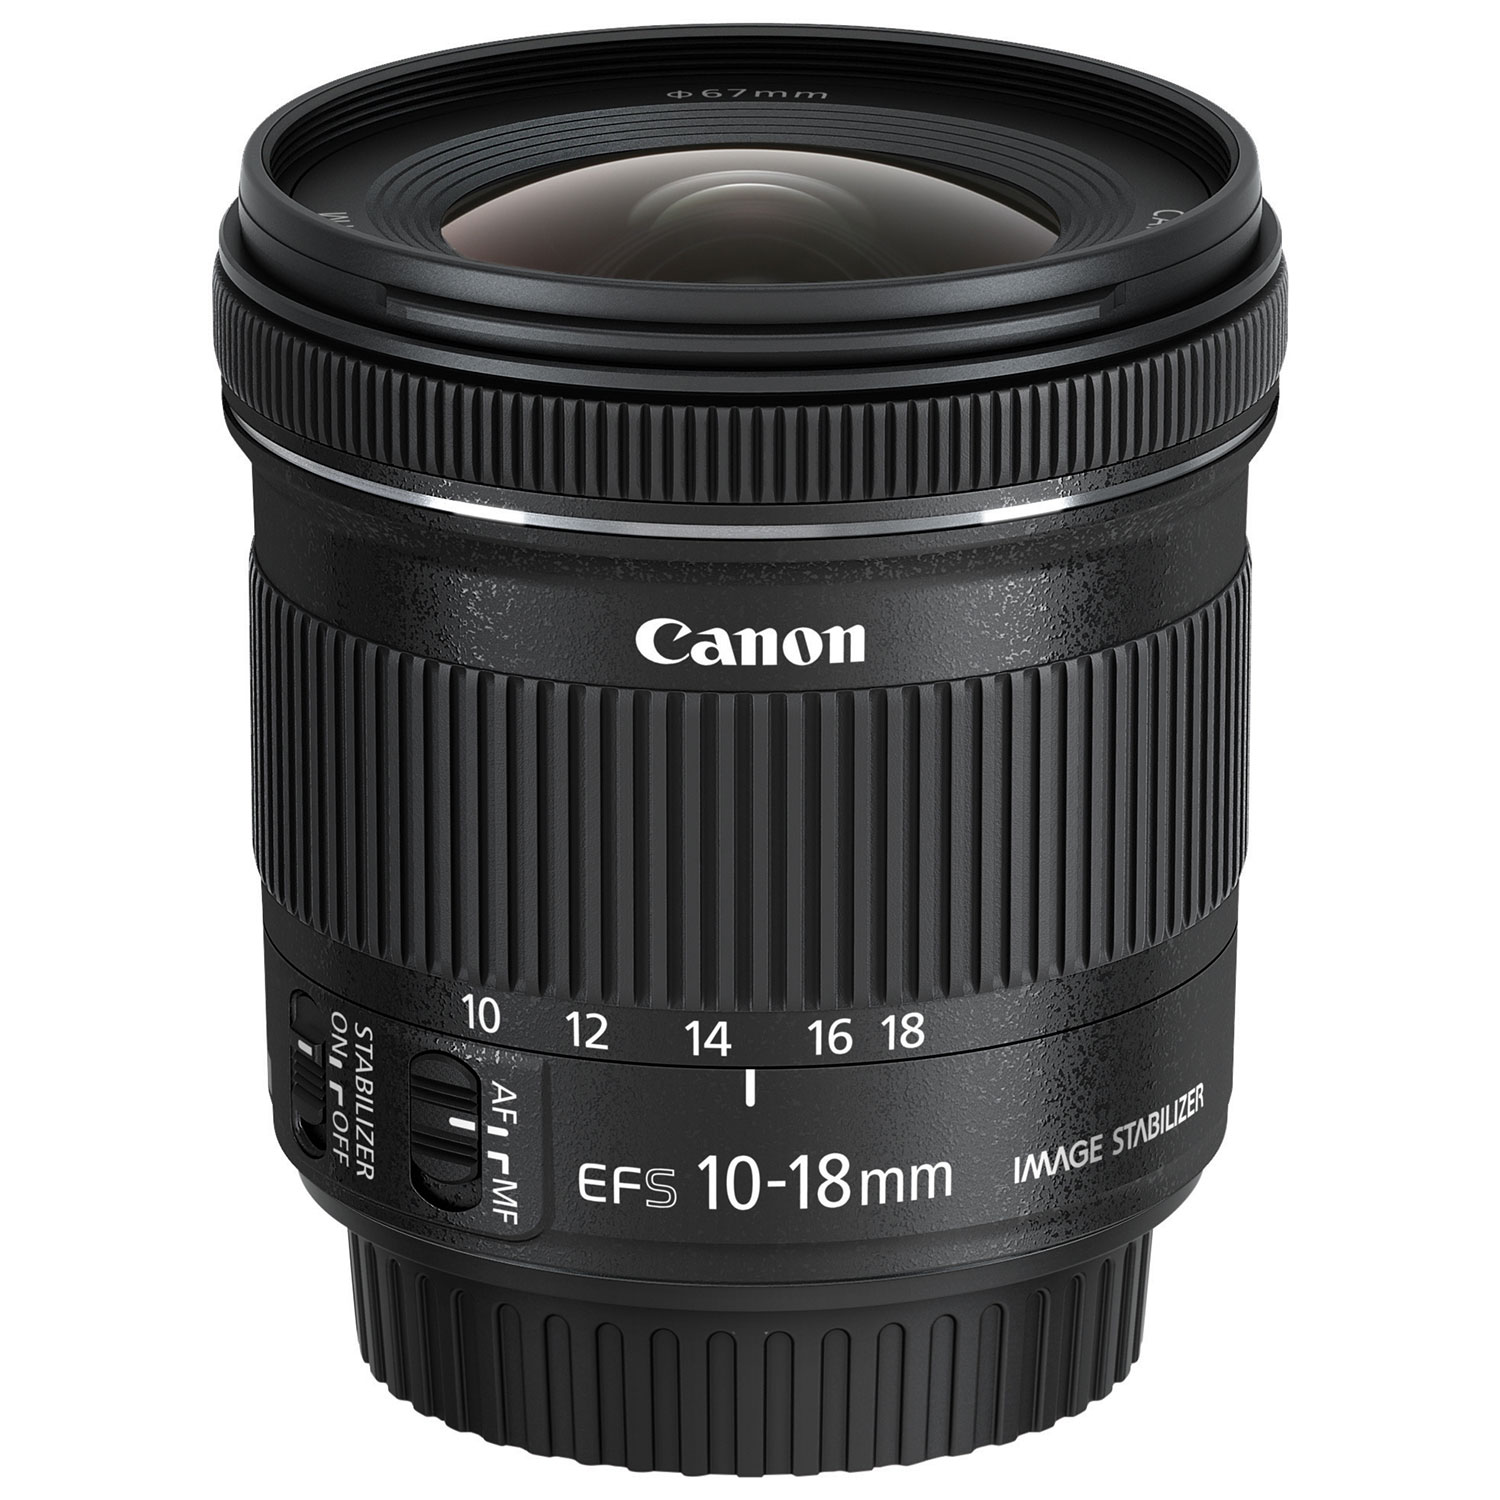 Canon EF-S 10-18mm f/4.5-5.6 IS STM Lens (9519B002) - Black